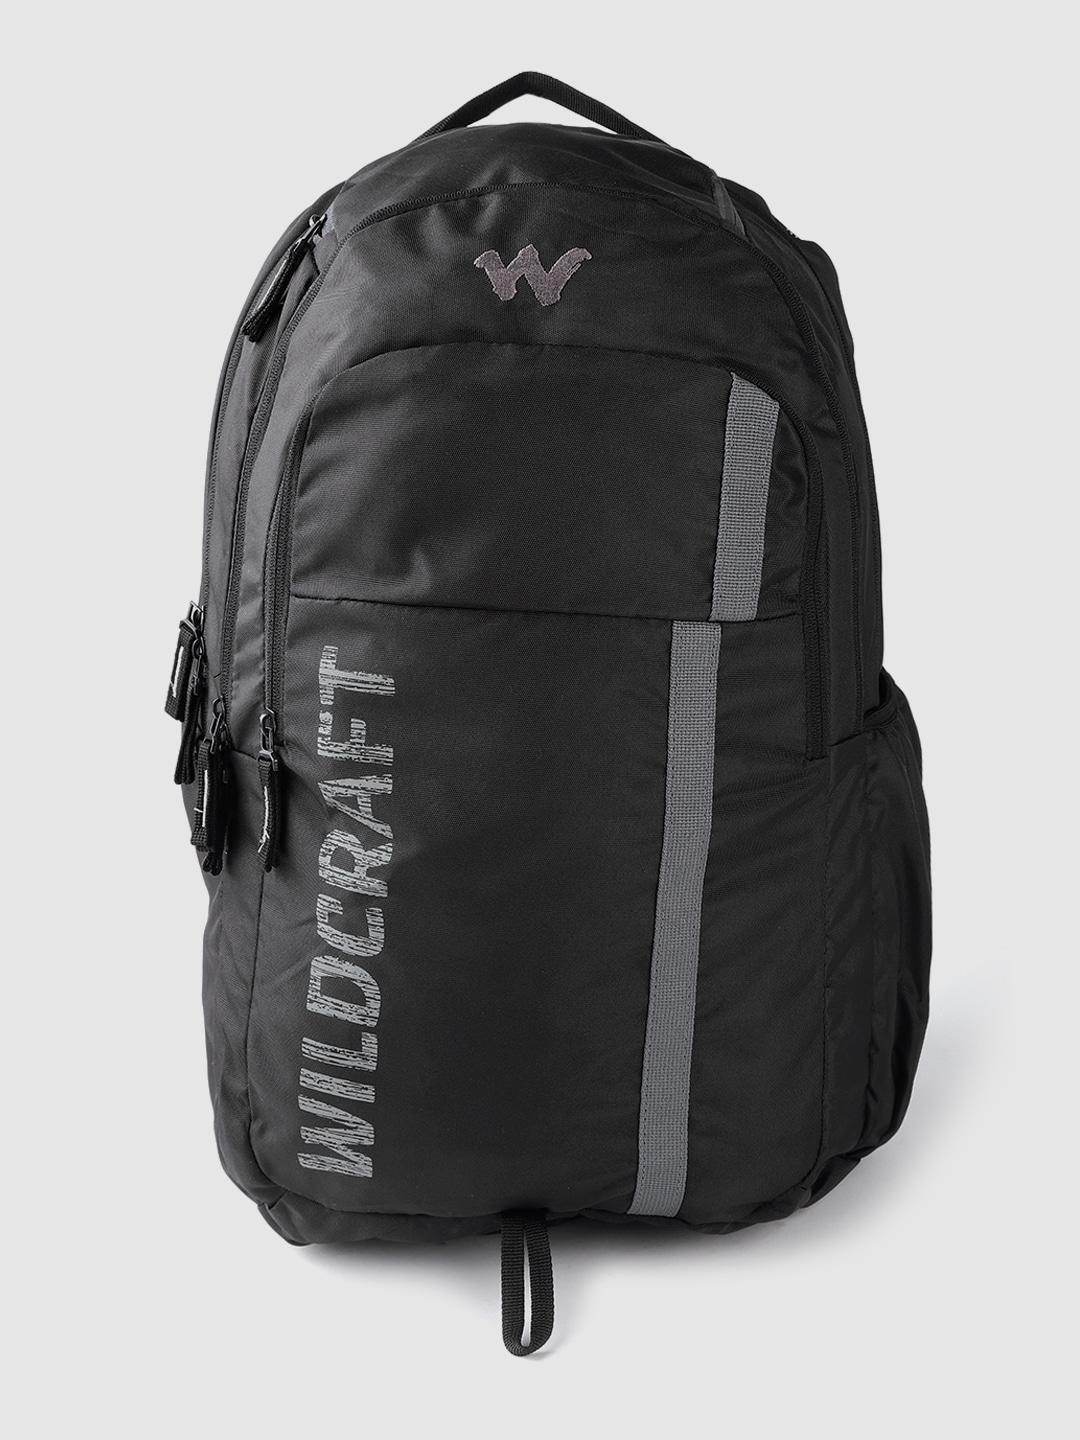 Wildcraft Unisex Lunar Backpack